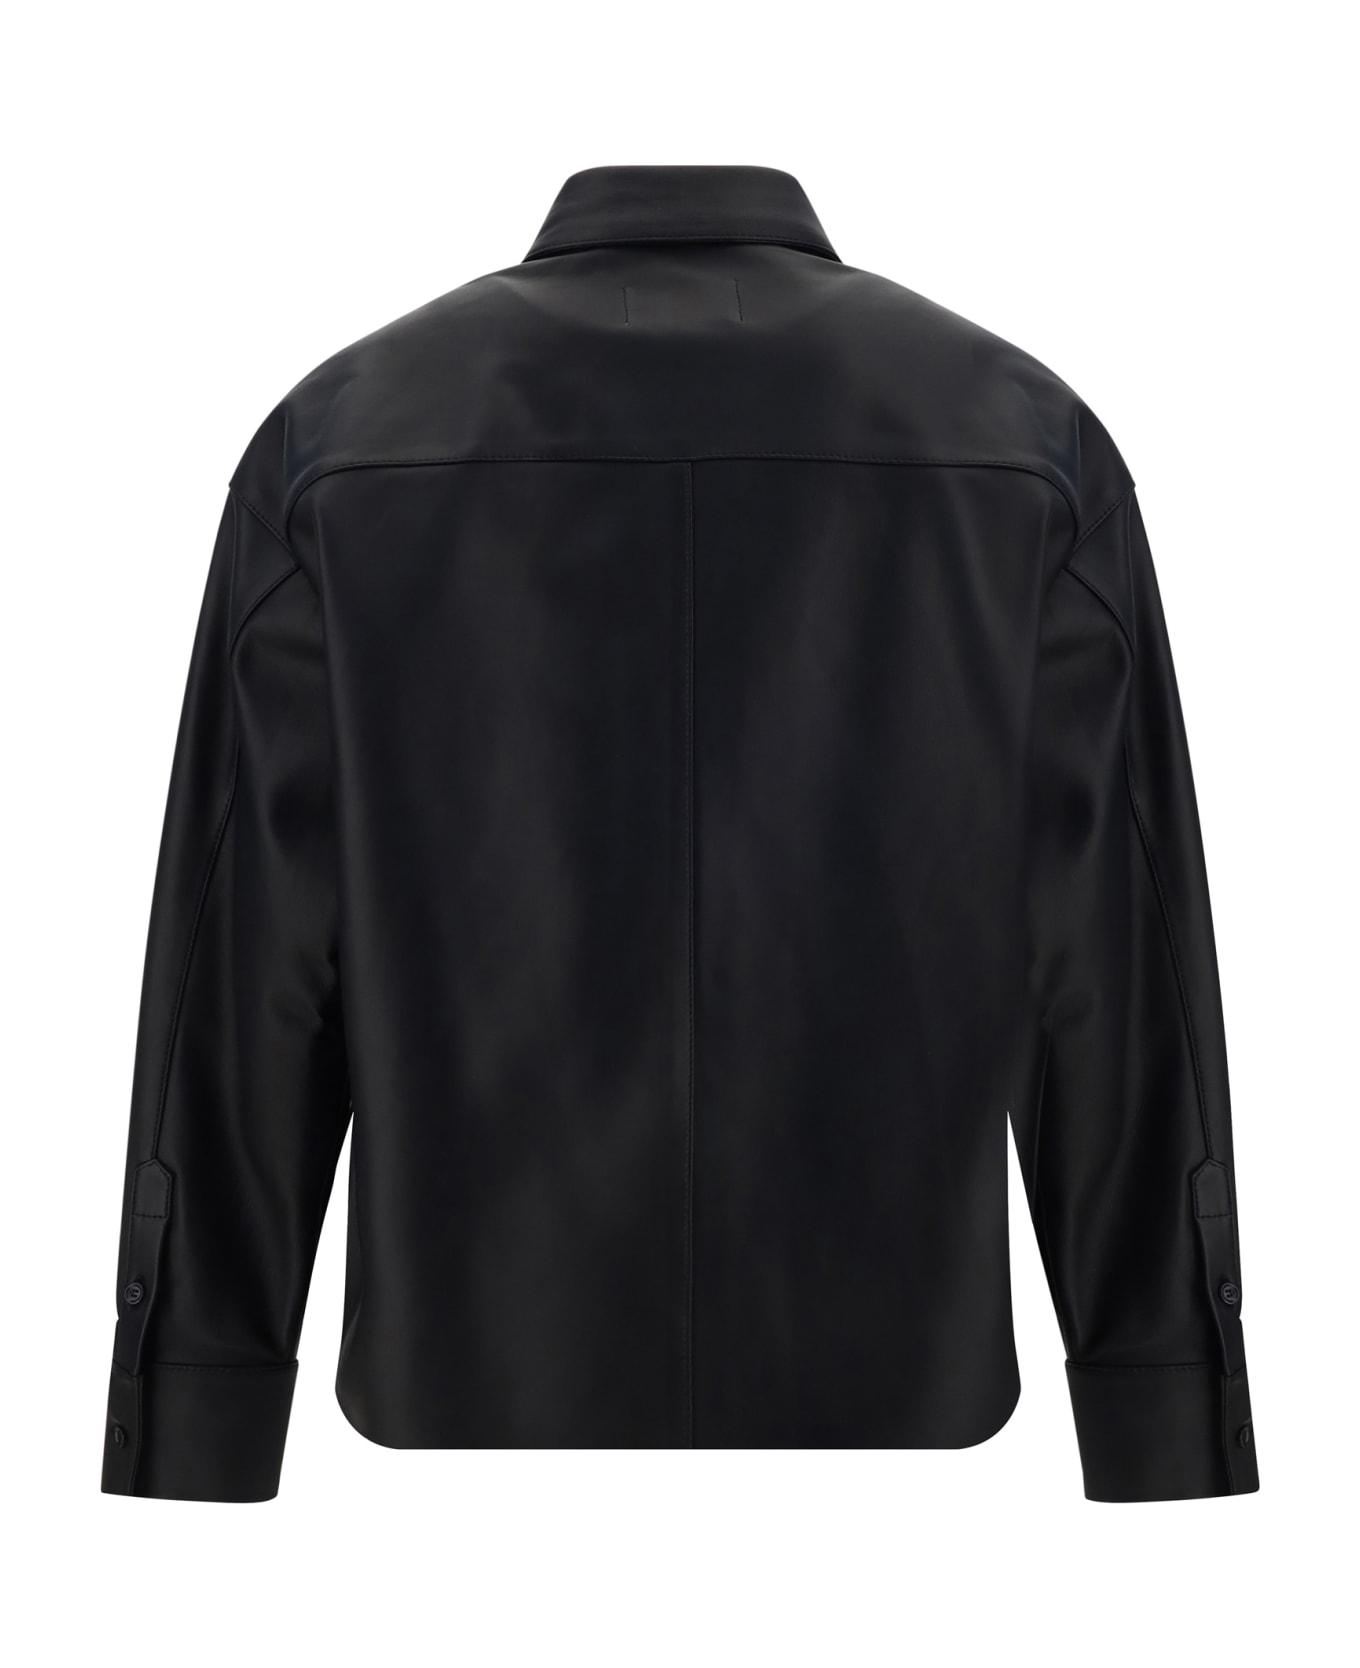 Ami Alexandre Mattiussi Leather Shirt - Black